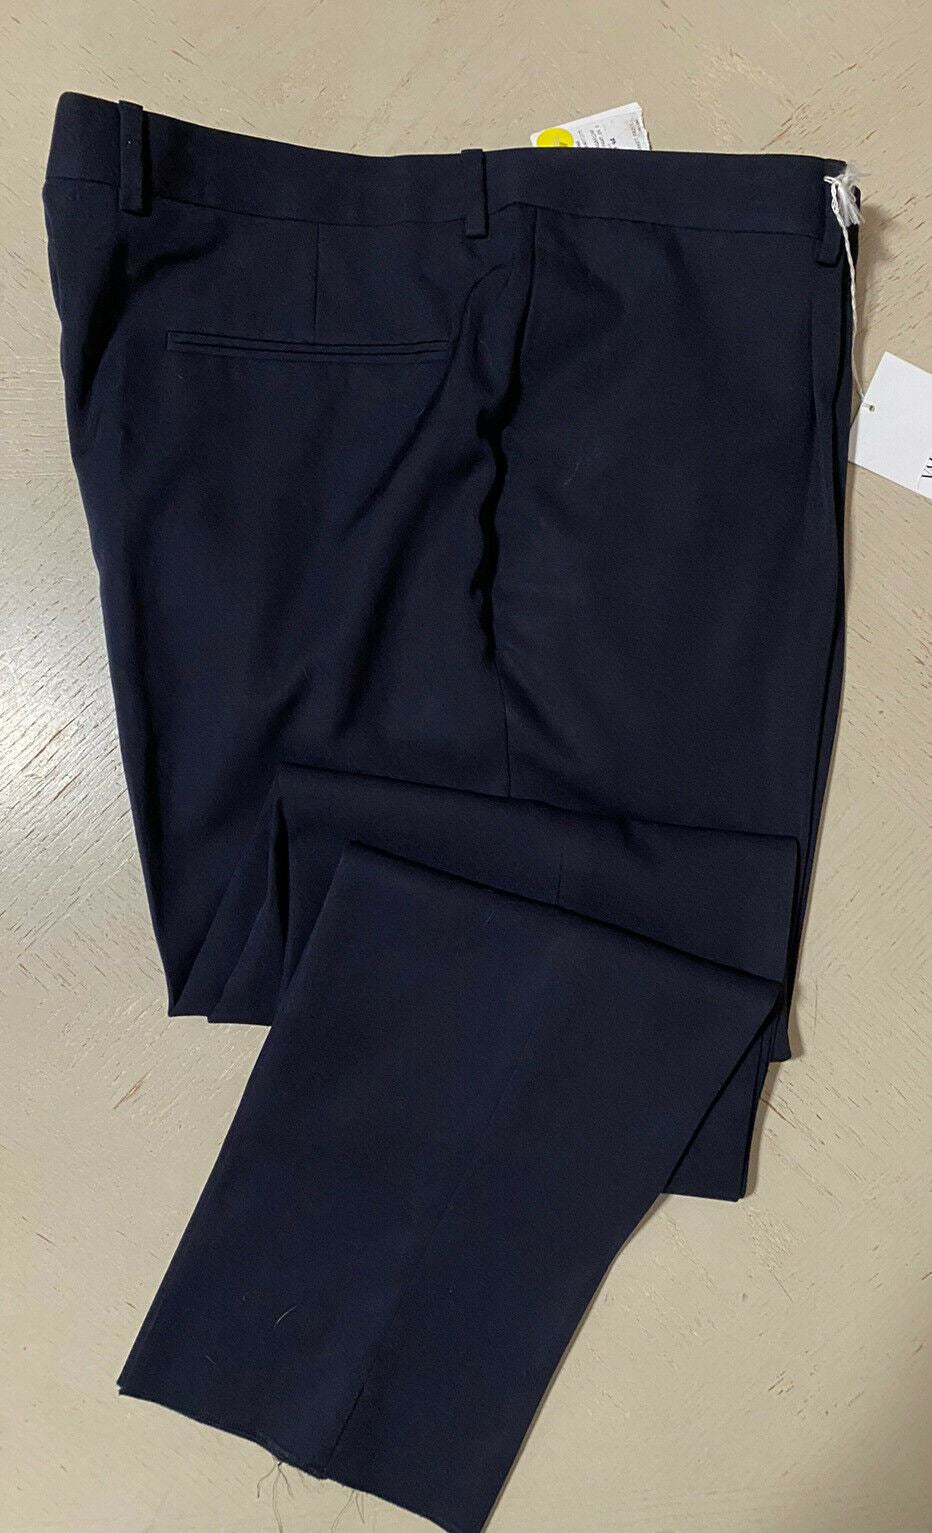 NWT $995 Valentino Мужские шерстяные классические брюки Темно-синие 42 США (58 ЕС) Италия